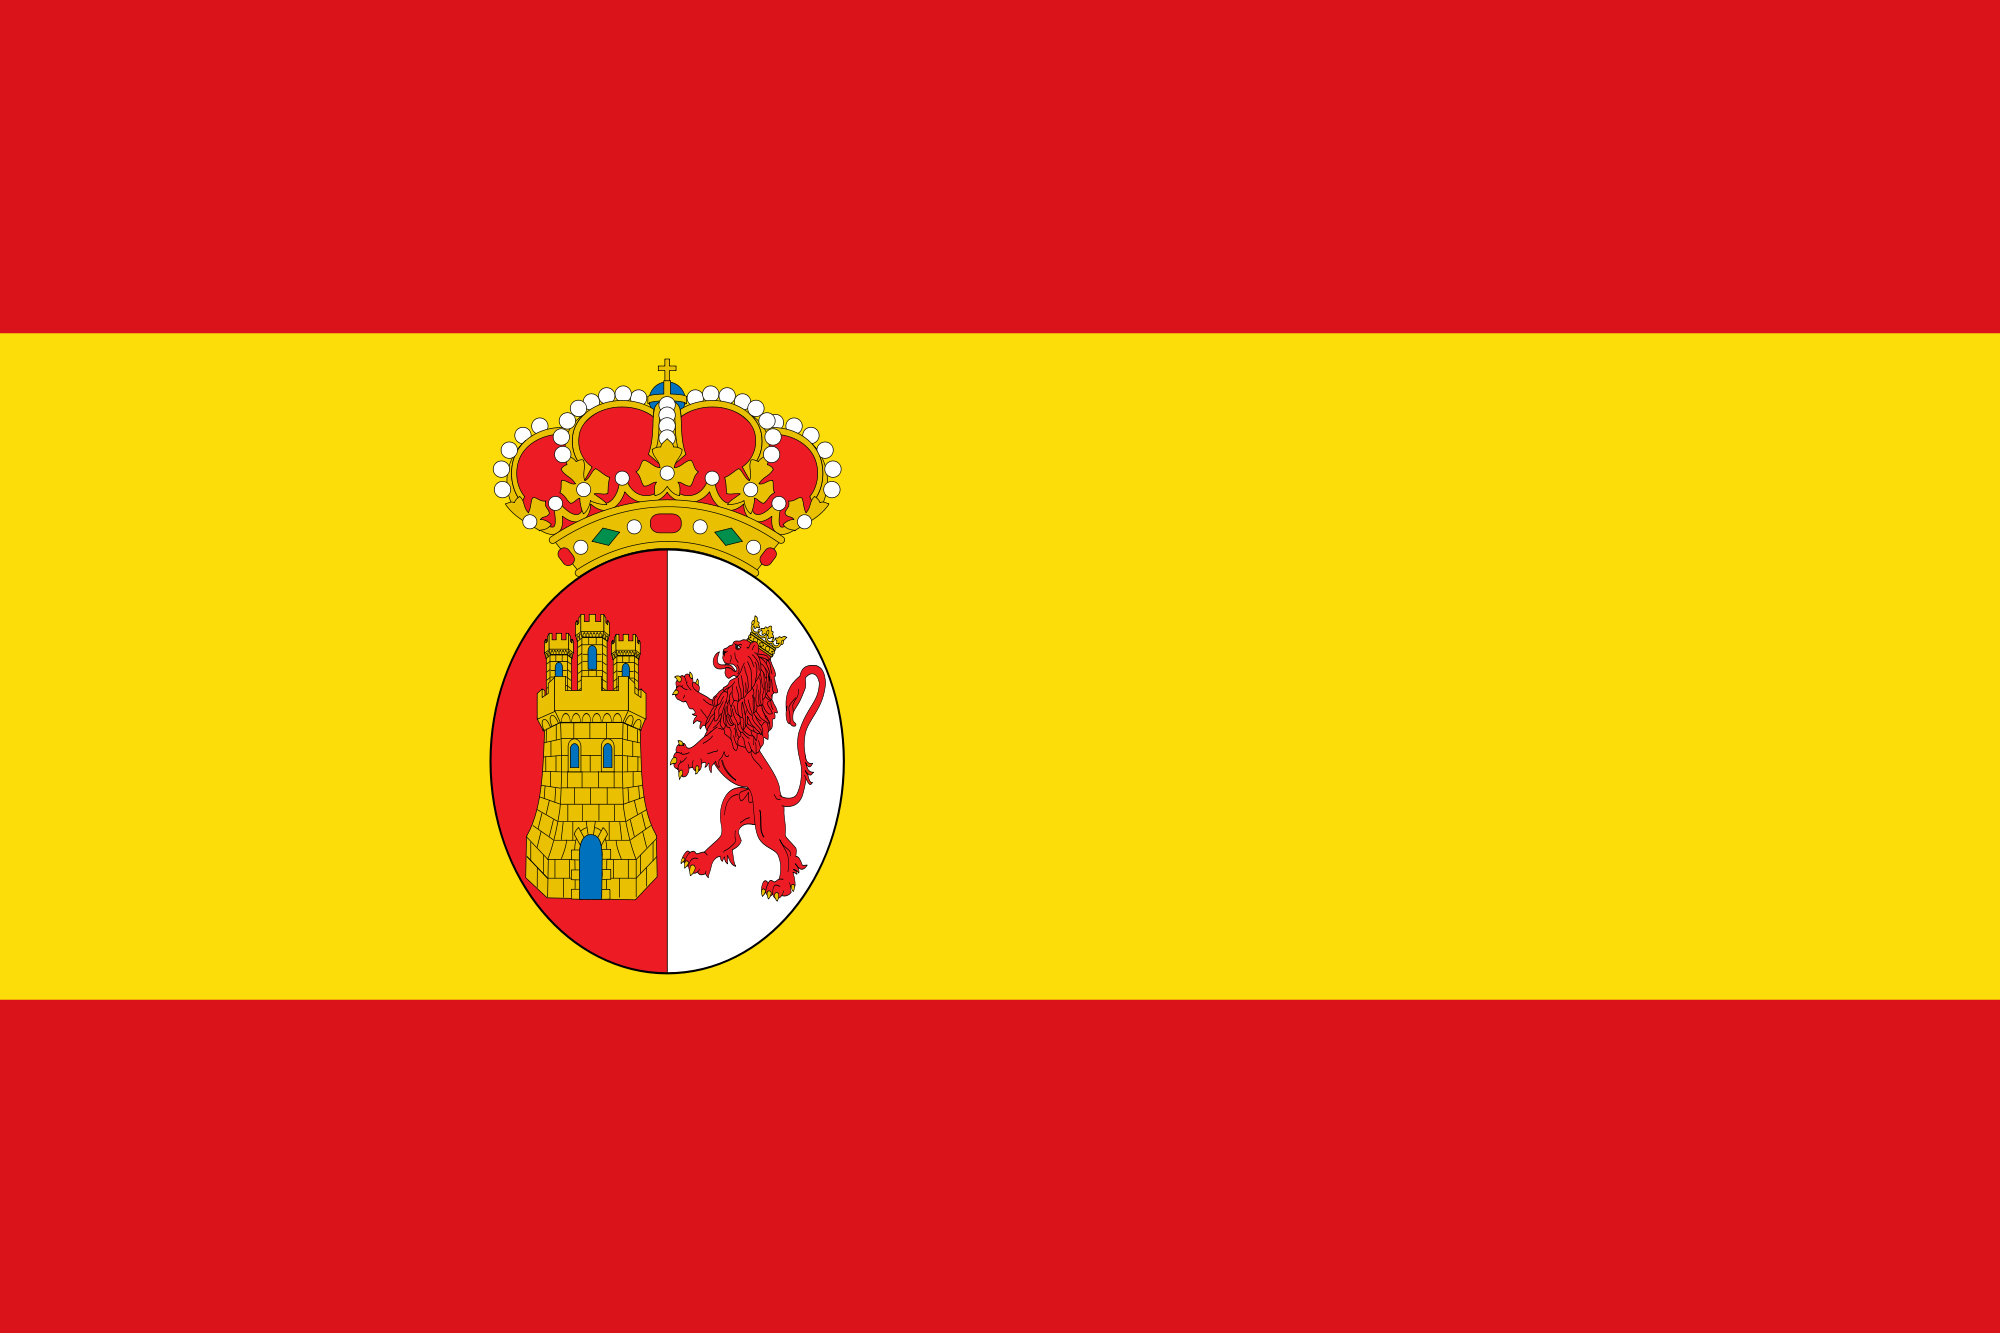 BiZiDEX Spain